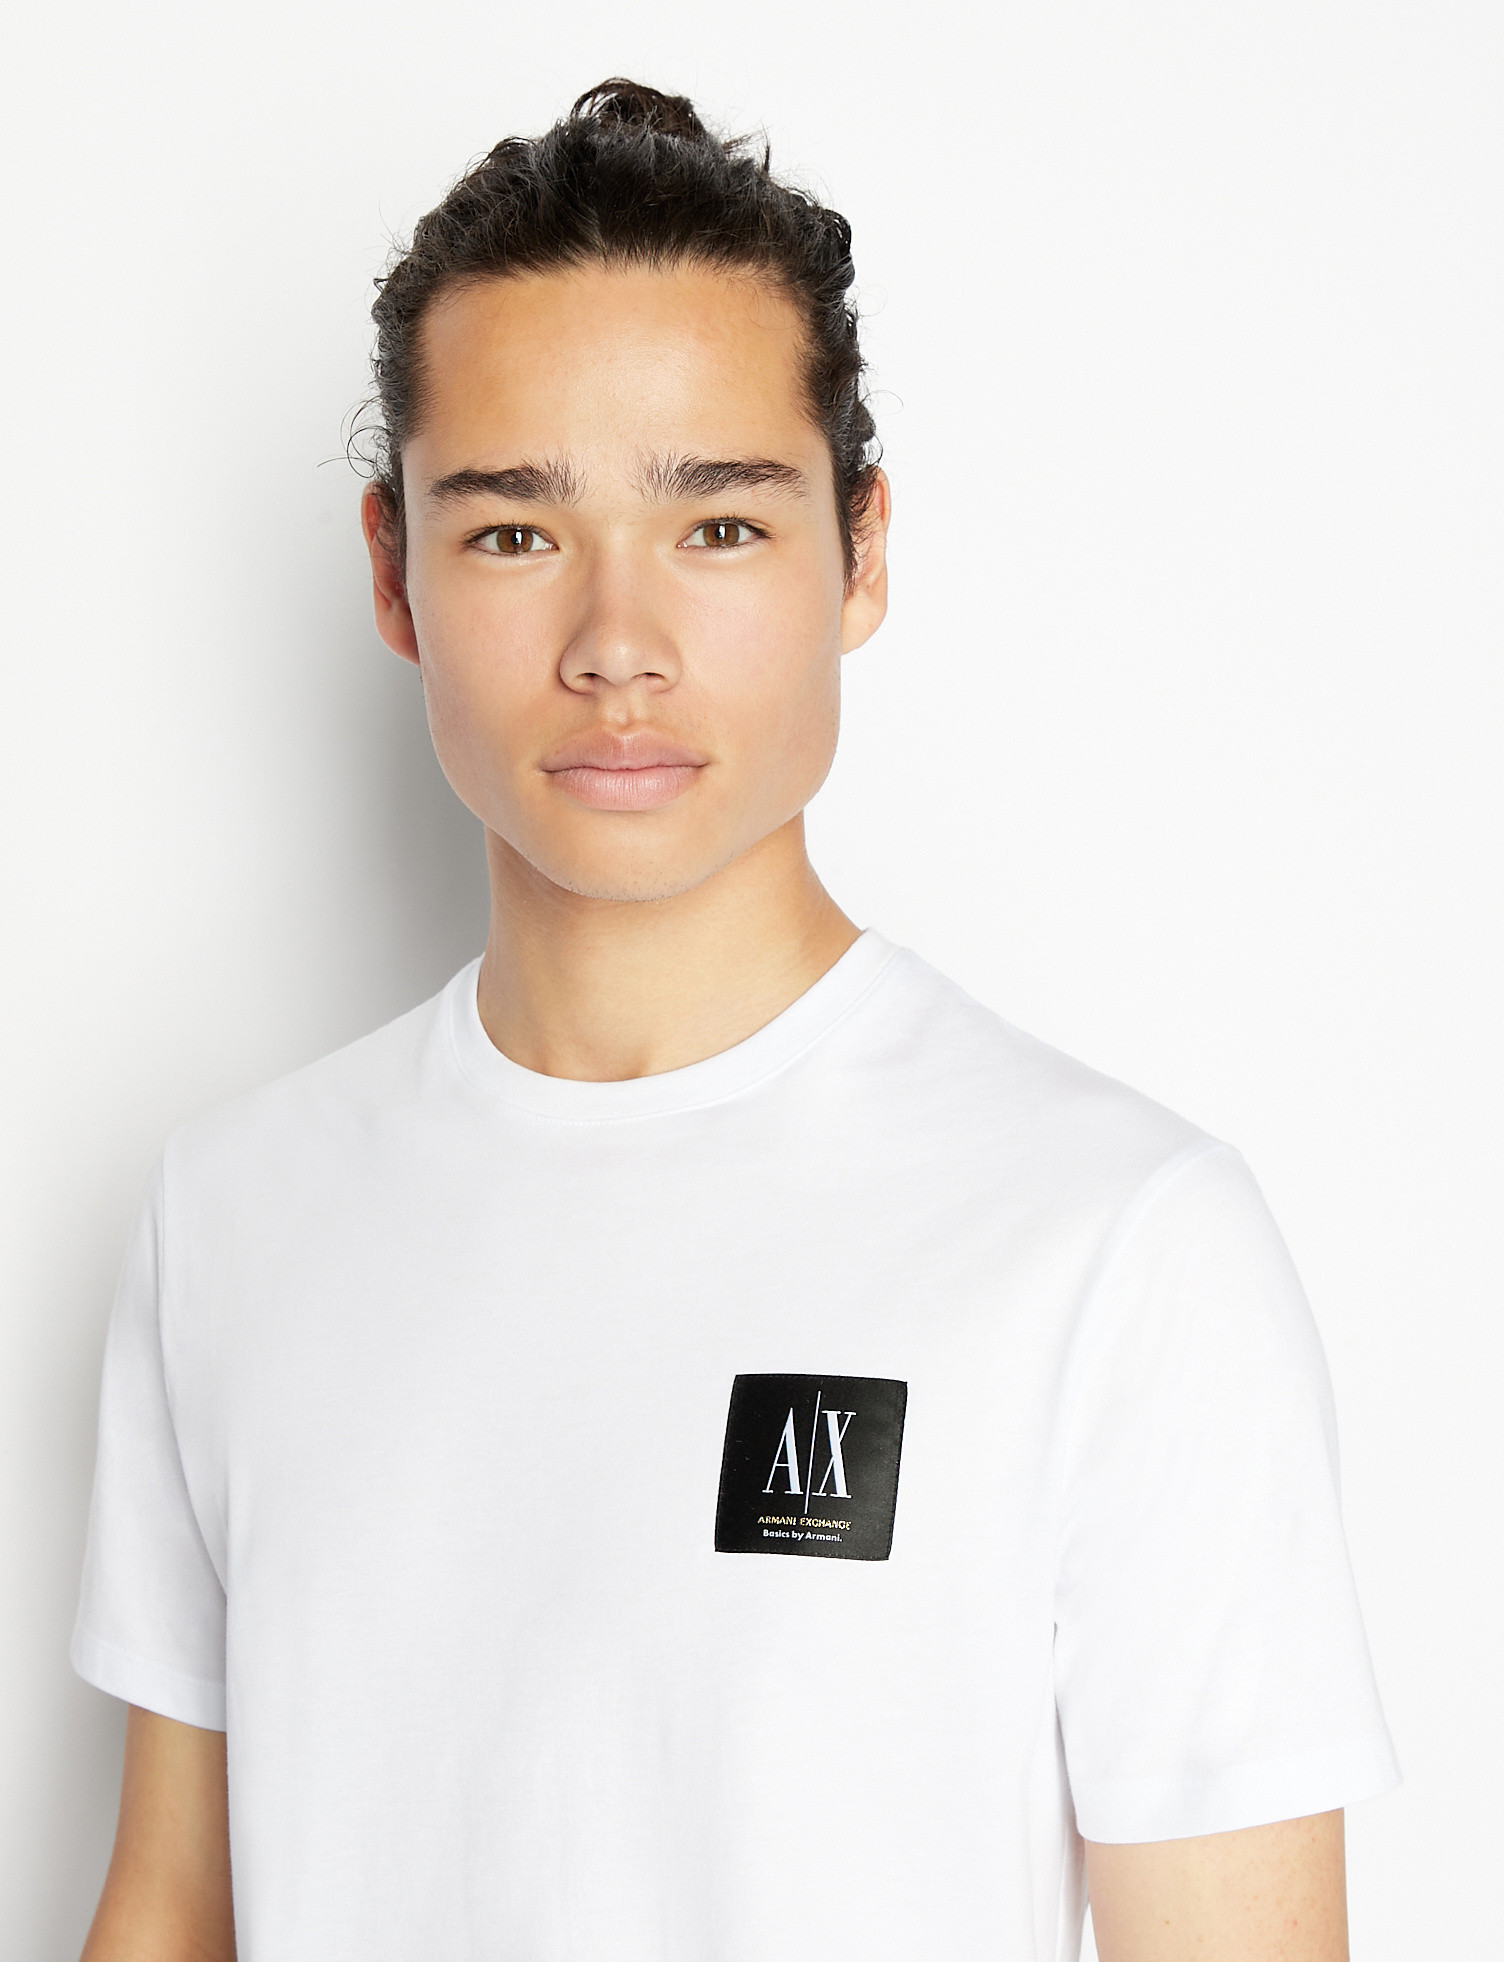 Armani Exchange - Regular fit T-shirt in organic cotton with logo, White, large image number 5